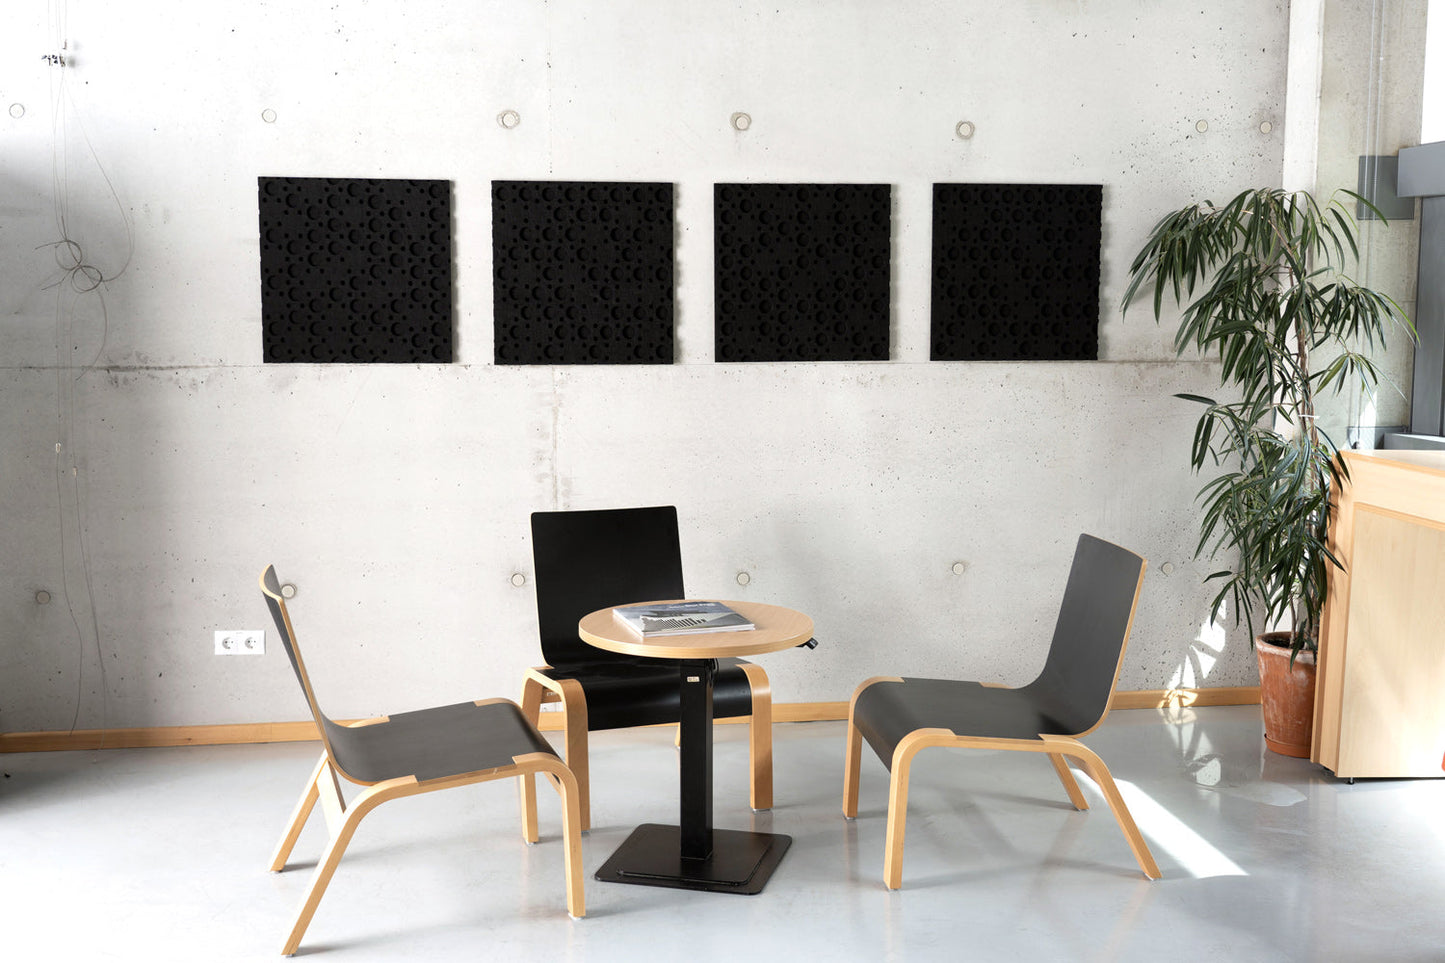 Self-adhesive Acoustic Felt Panel Circles Dark Gray 18mm